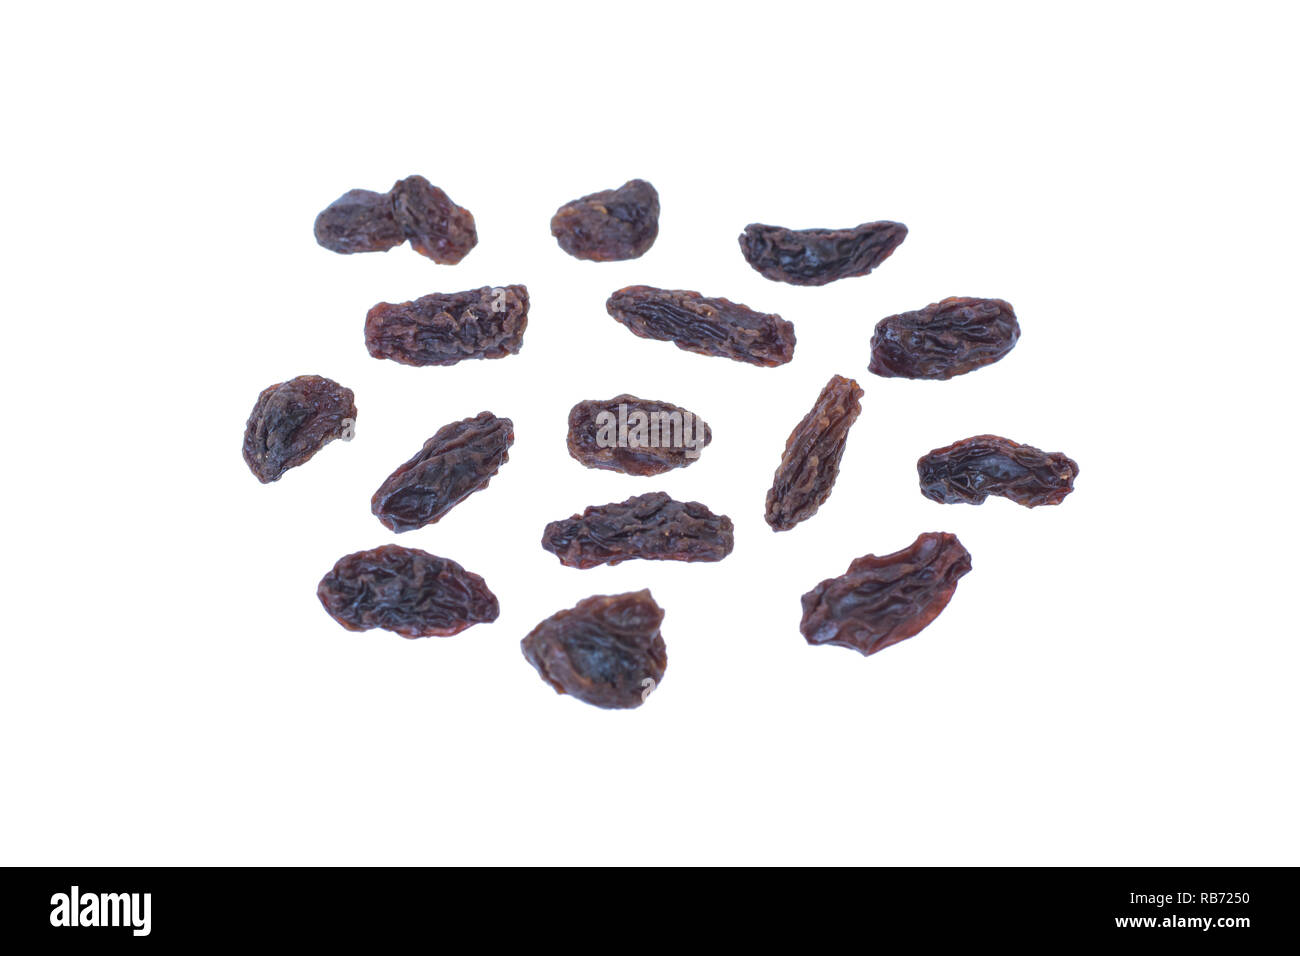 Raisins (Sultanas) isolated on white Stock Photo